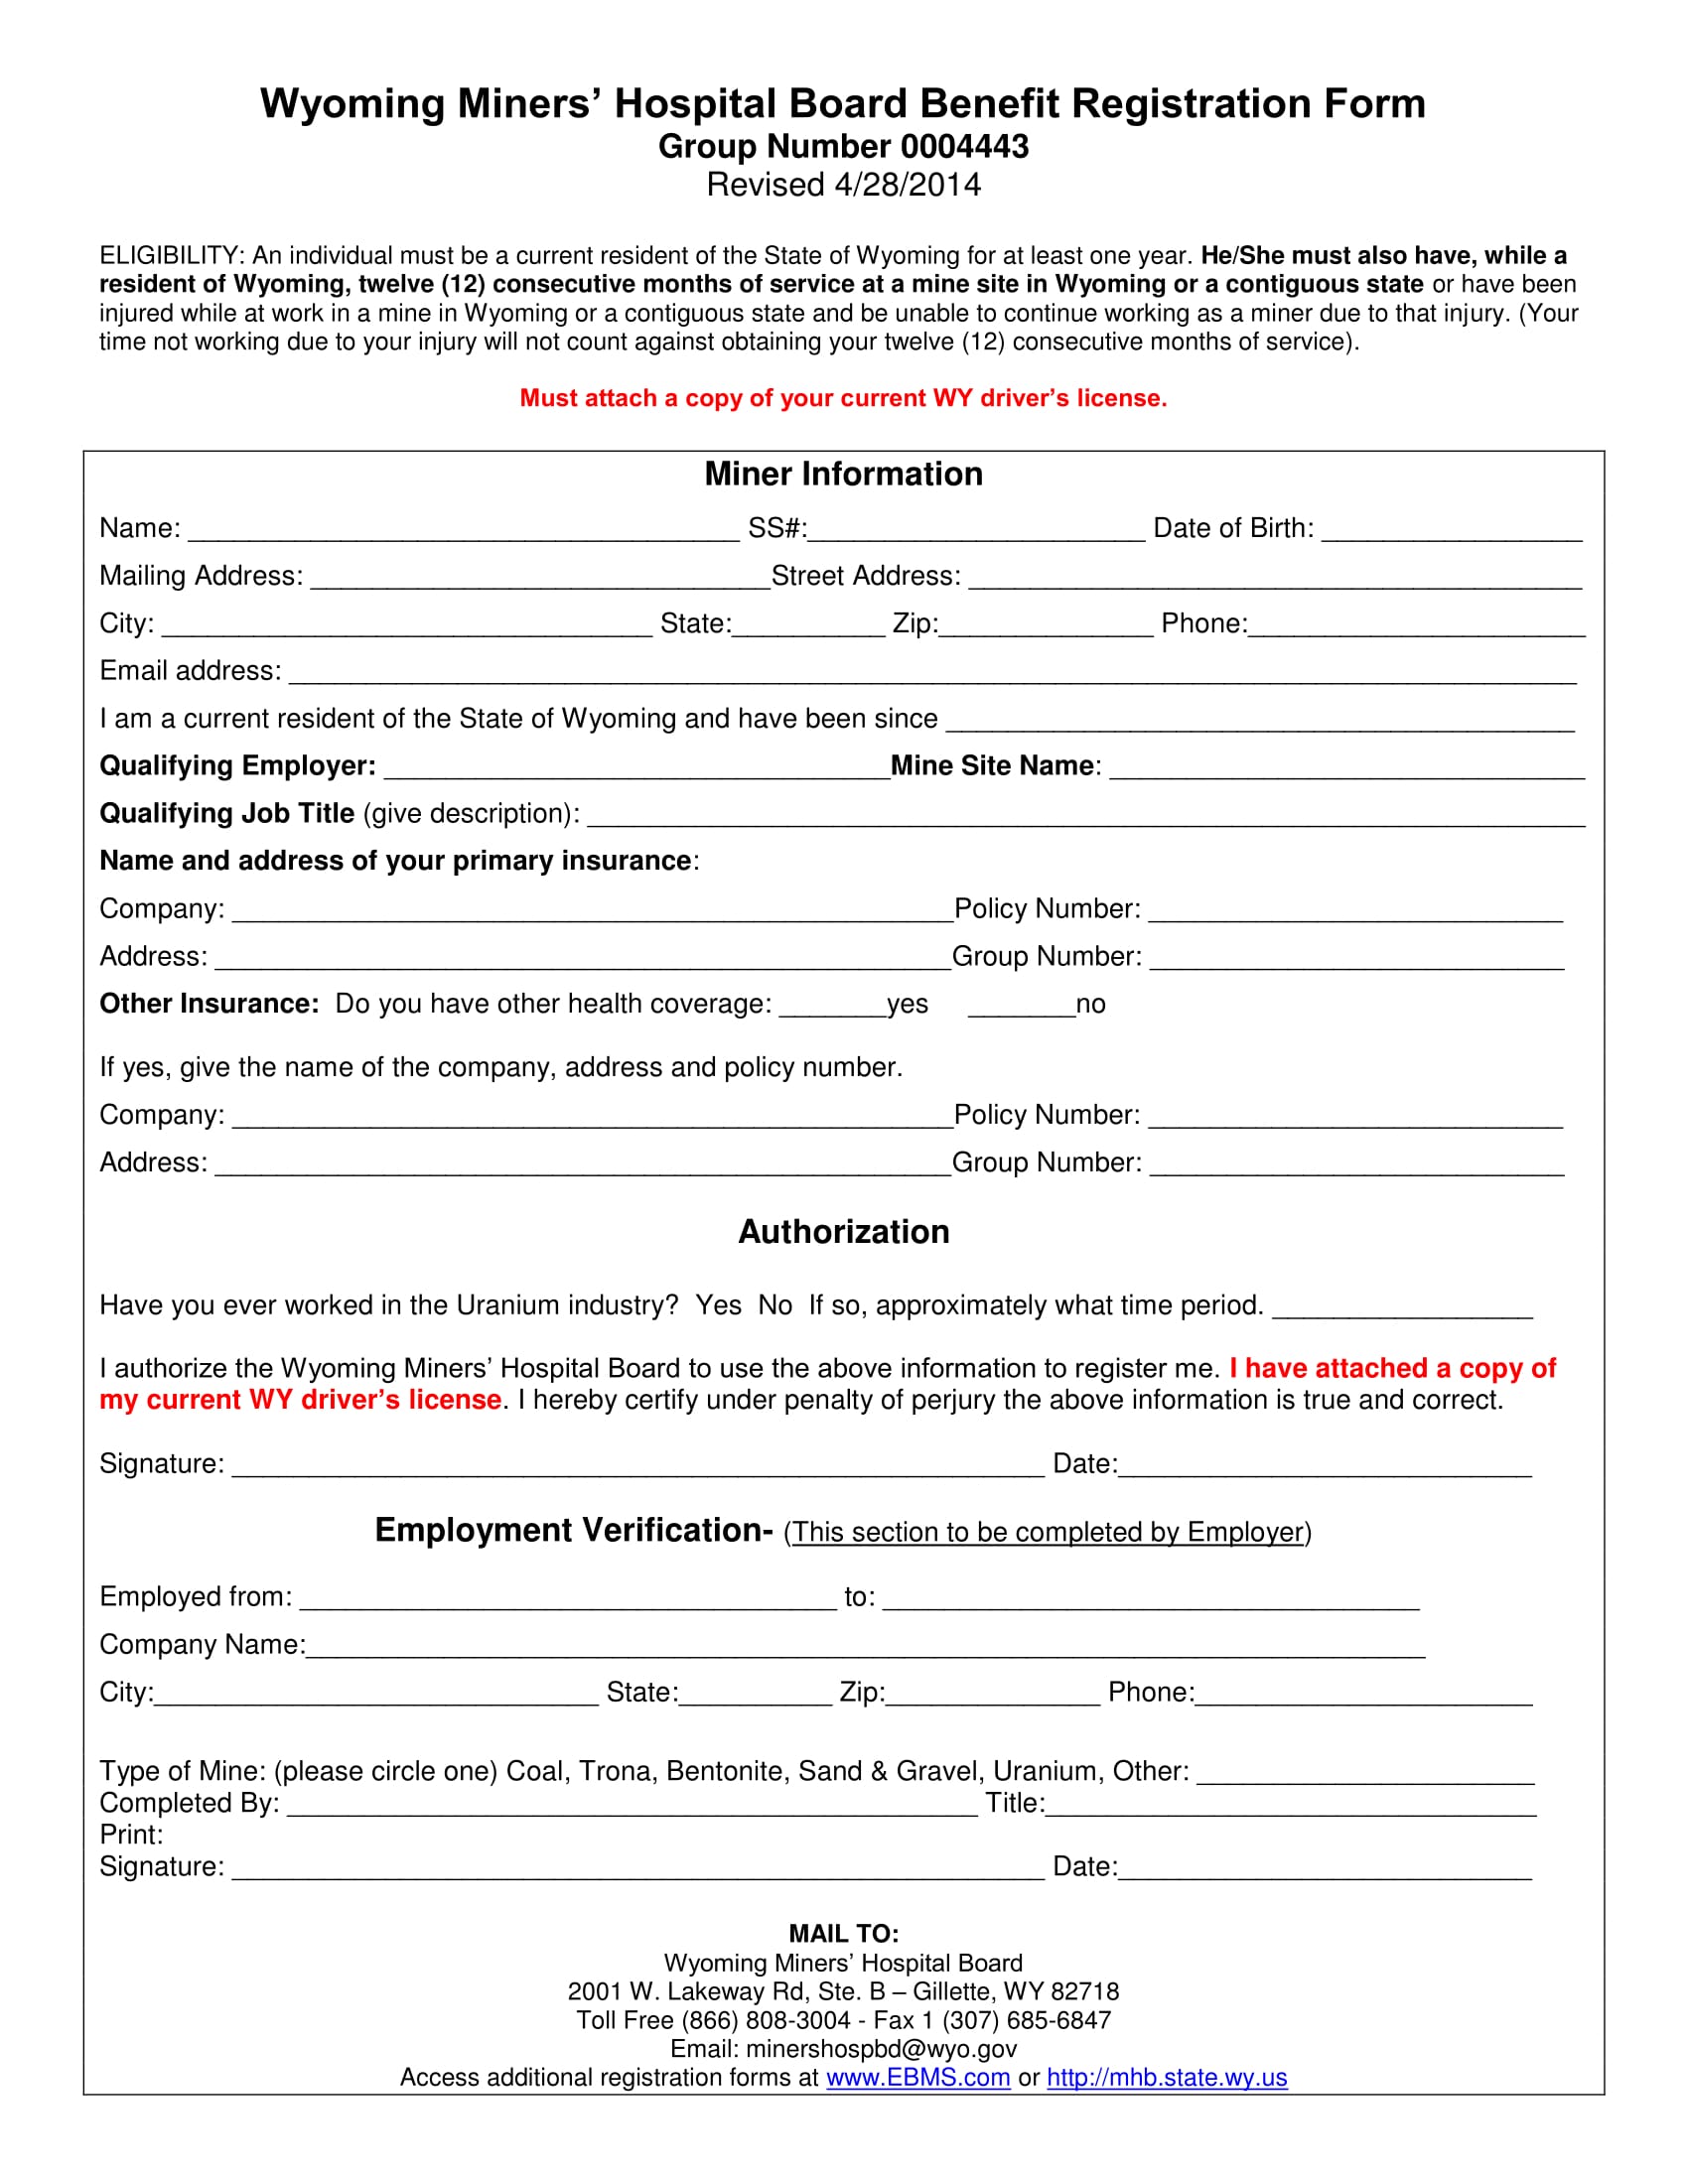 FREE 9+ Hospital Registration Forms in PDF